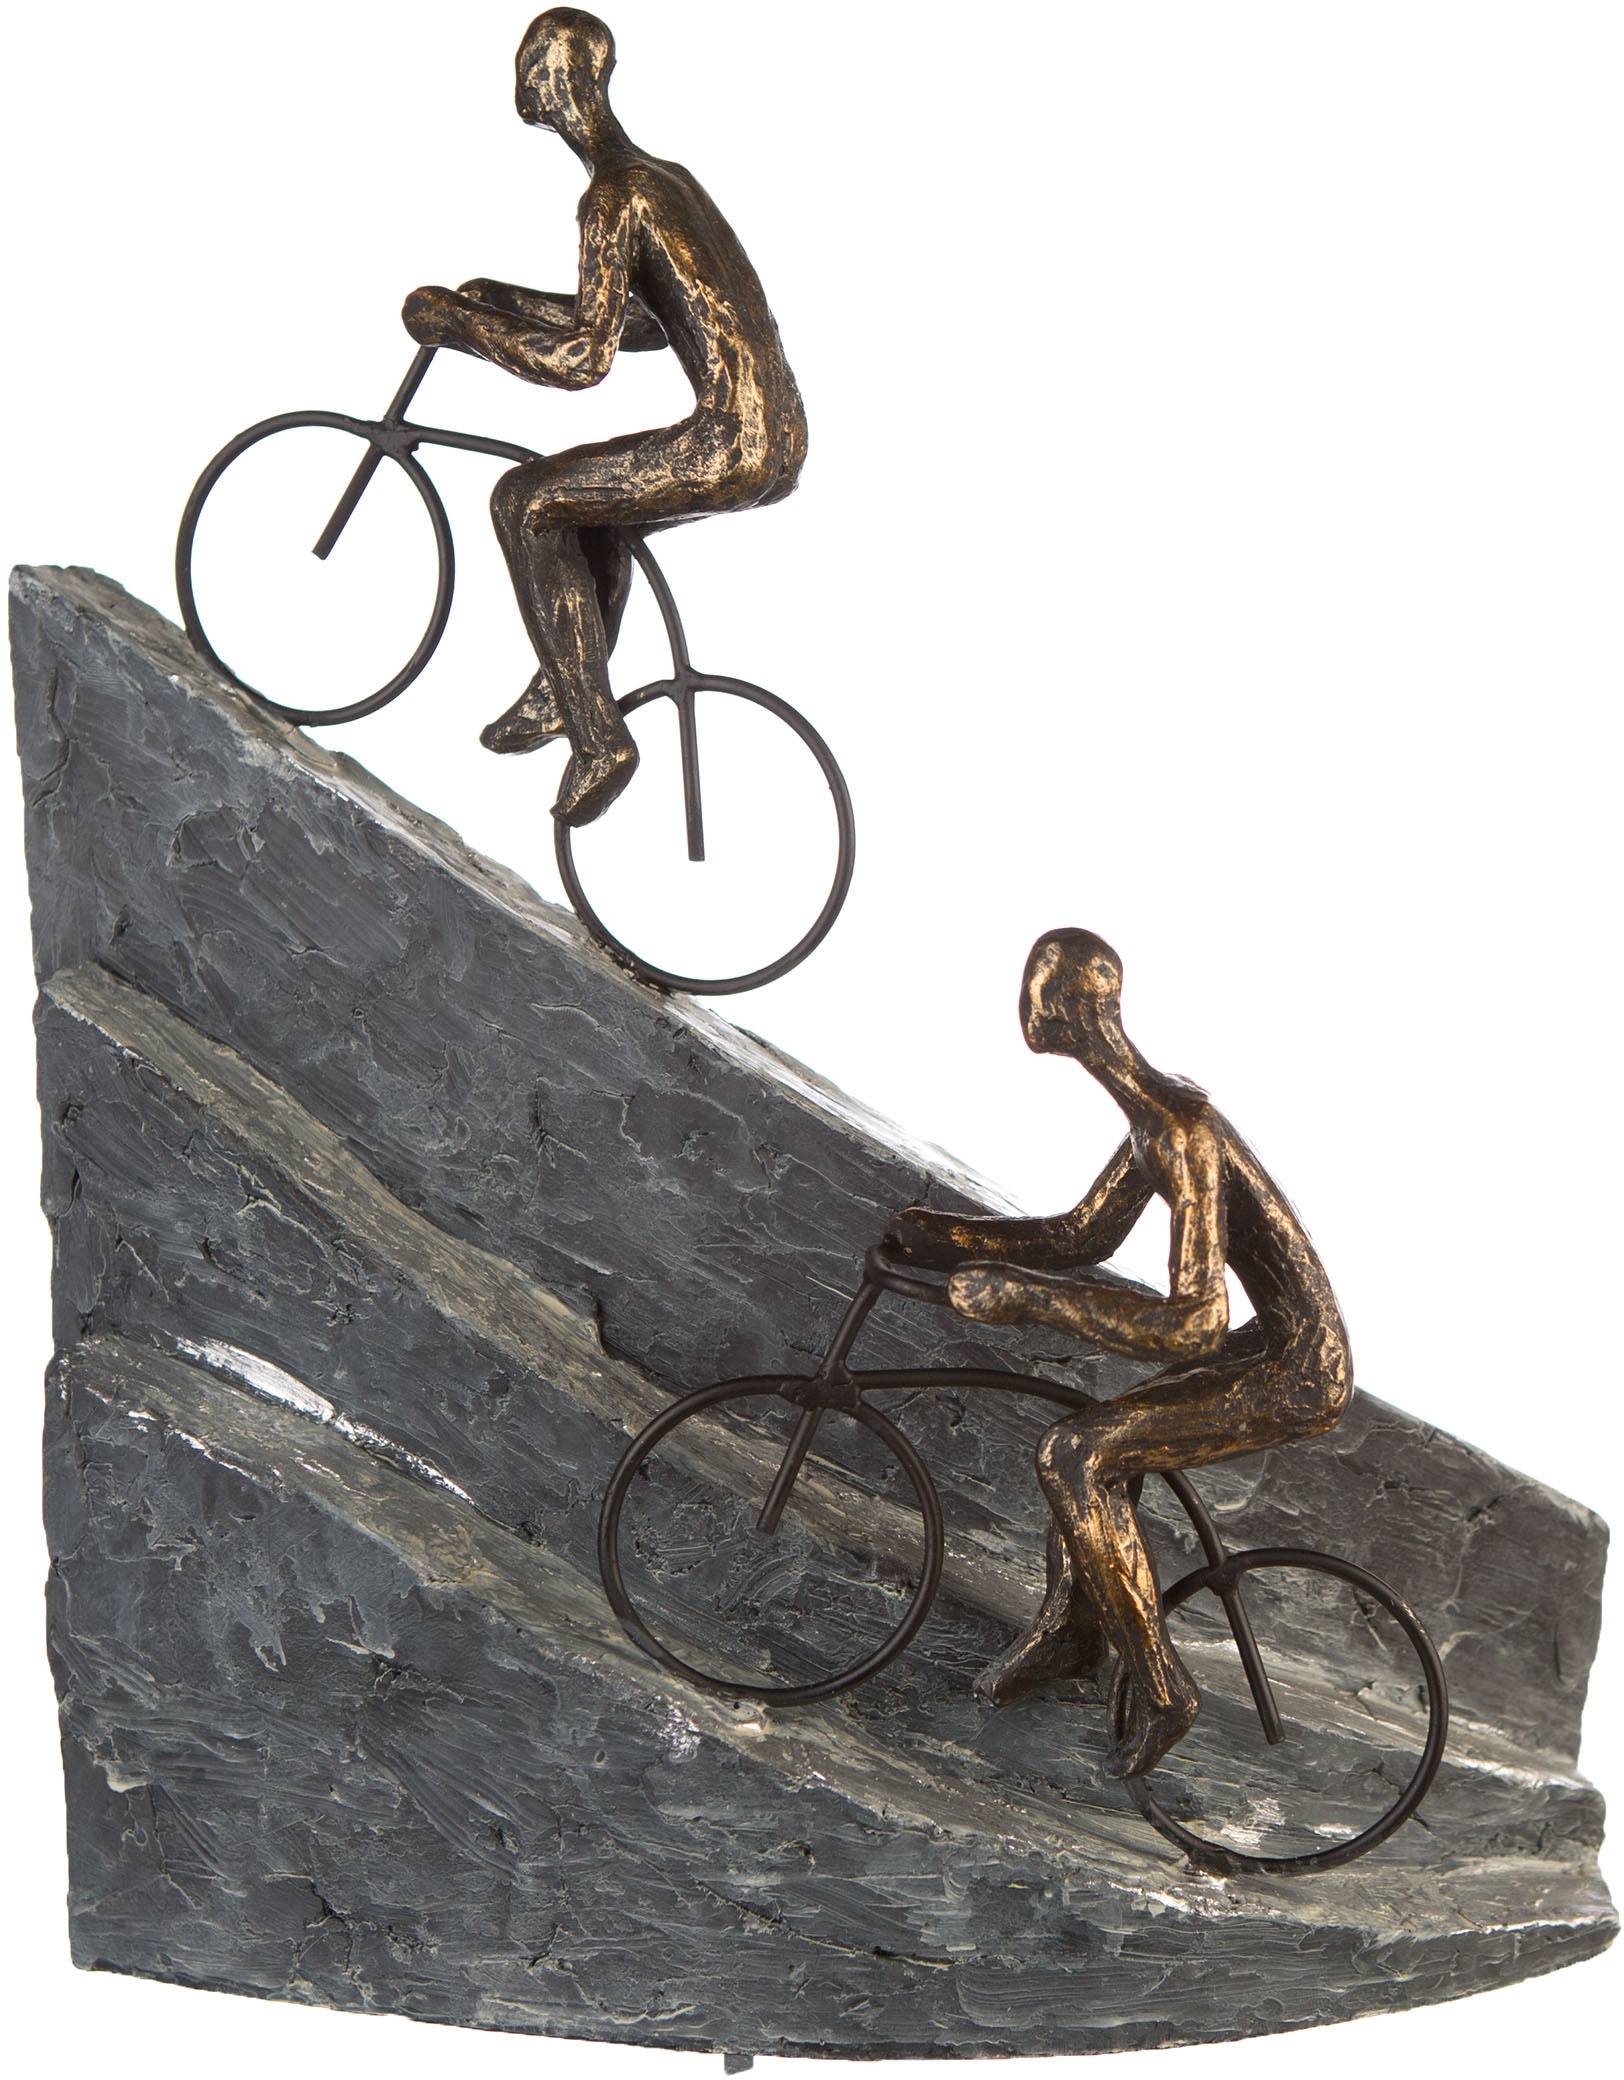 Dekofigur »Skulptur Racing, bronzefarben/grau«, bronzefarben/grau, Polyresin